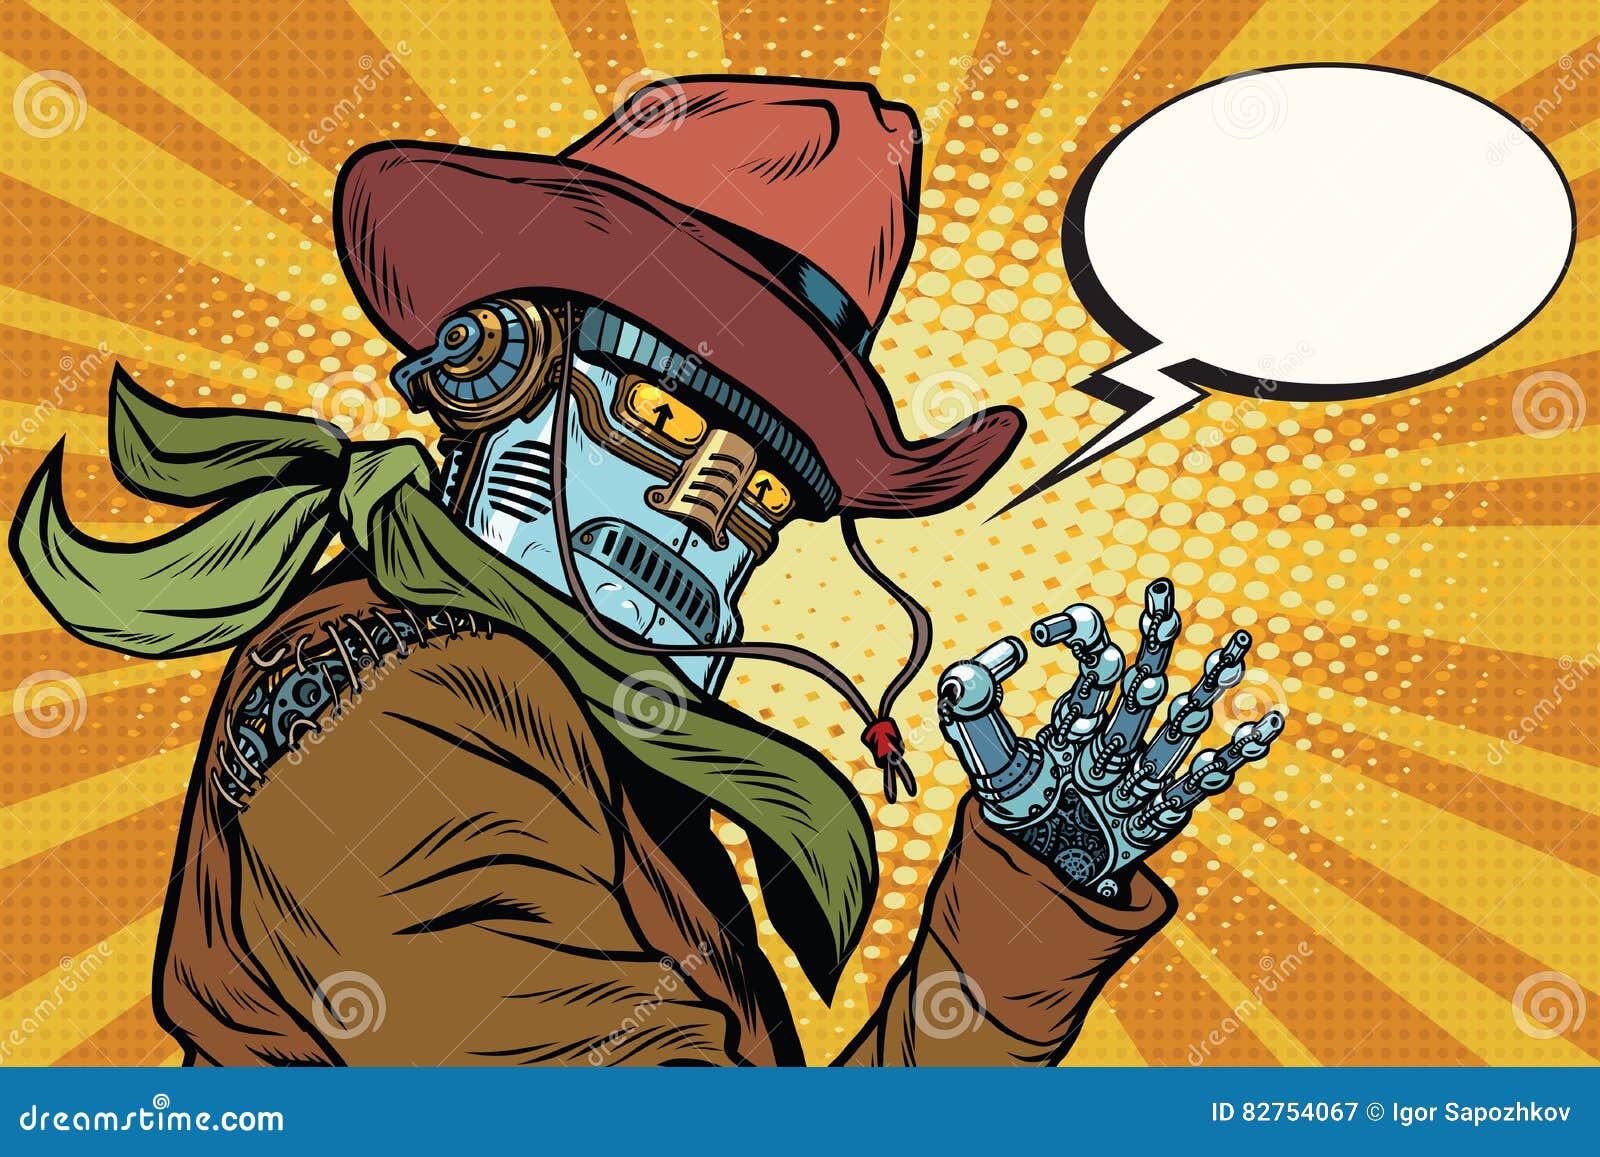 Steampunk Robot Cowboy Okay Stock Vector - Illustration character, game: